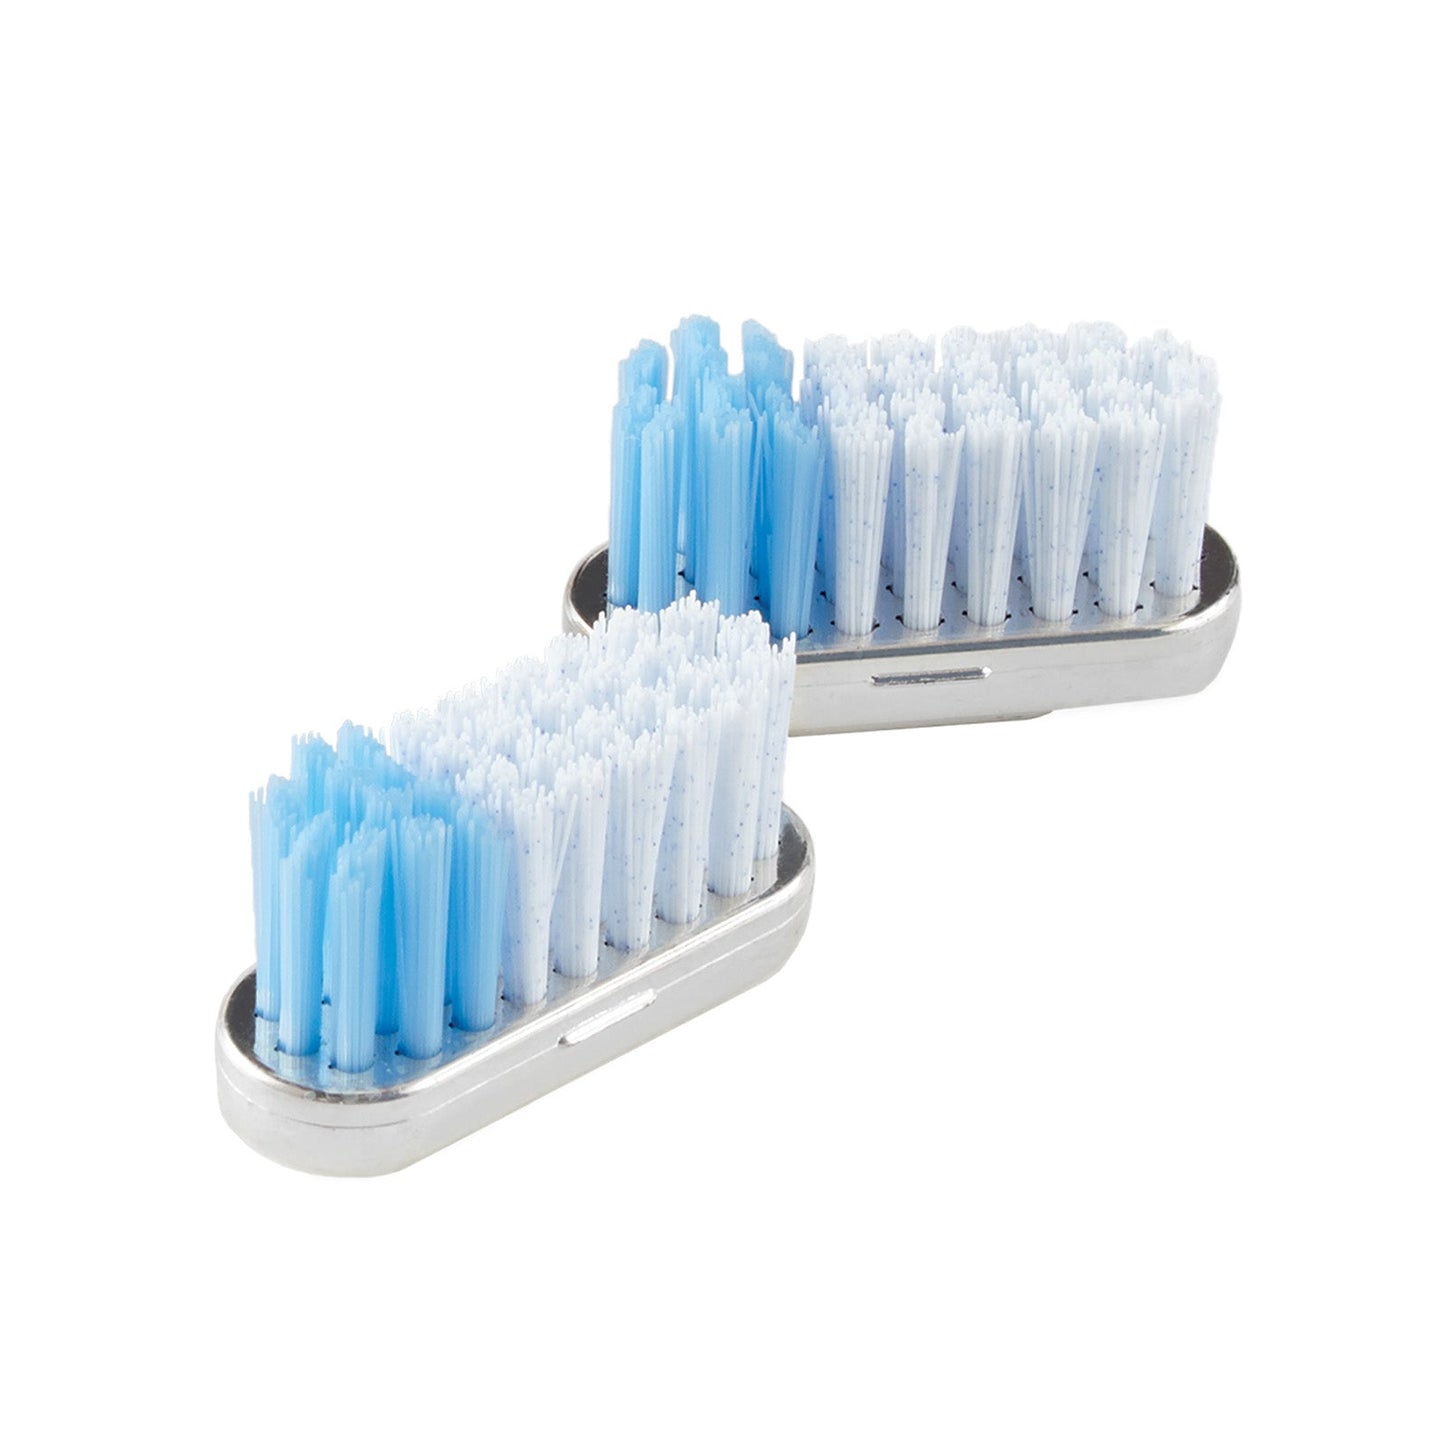 Toothbrush Refills